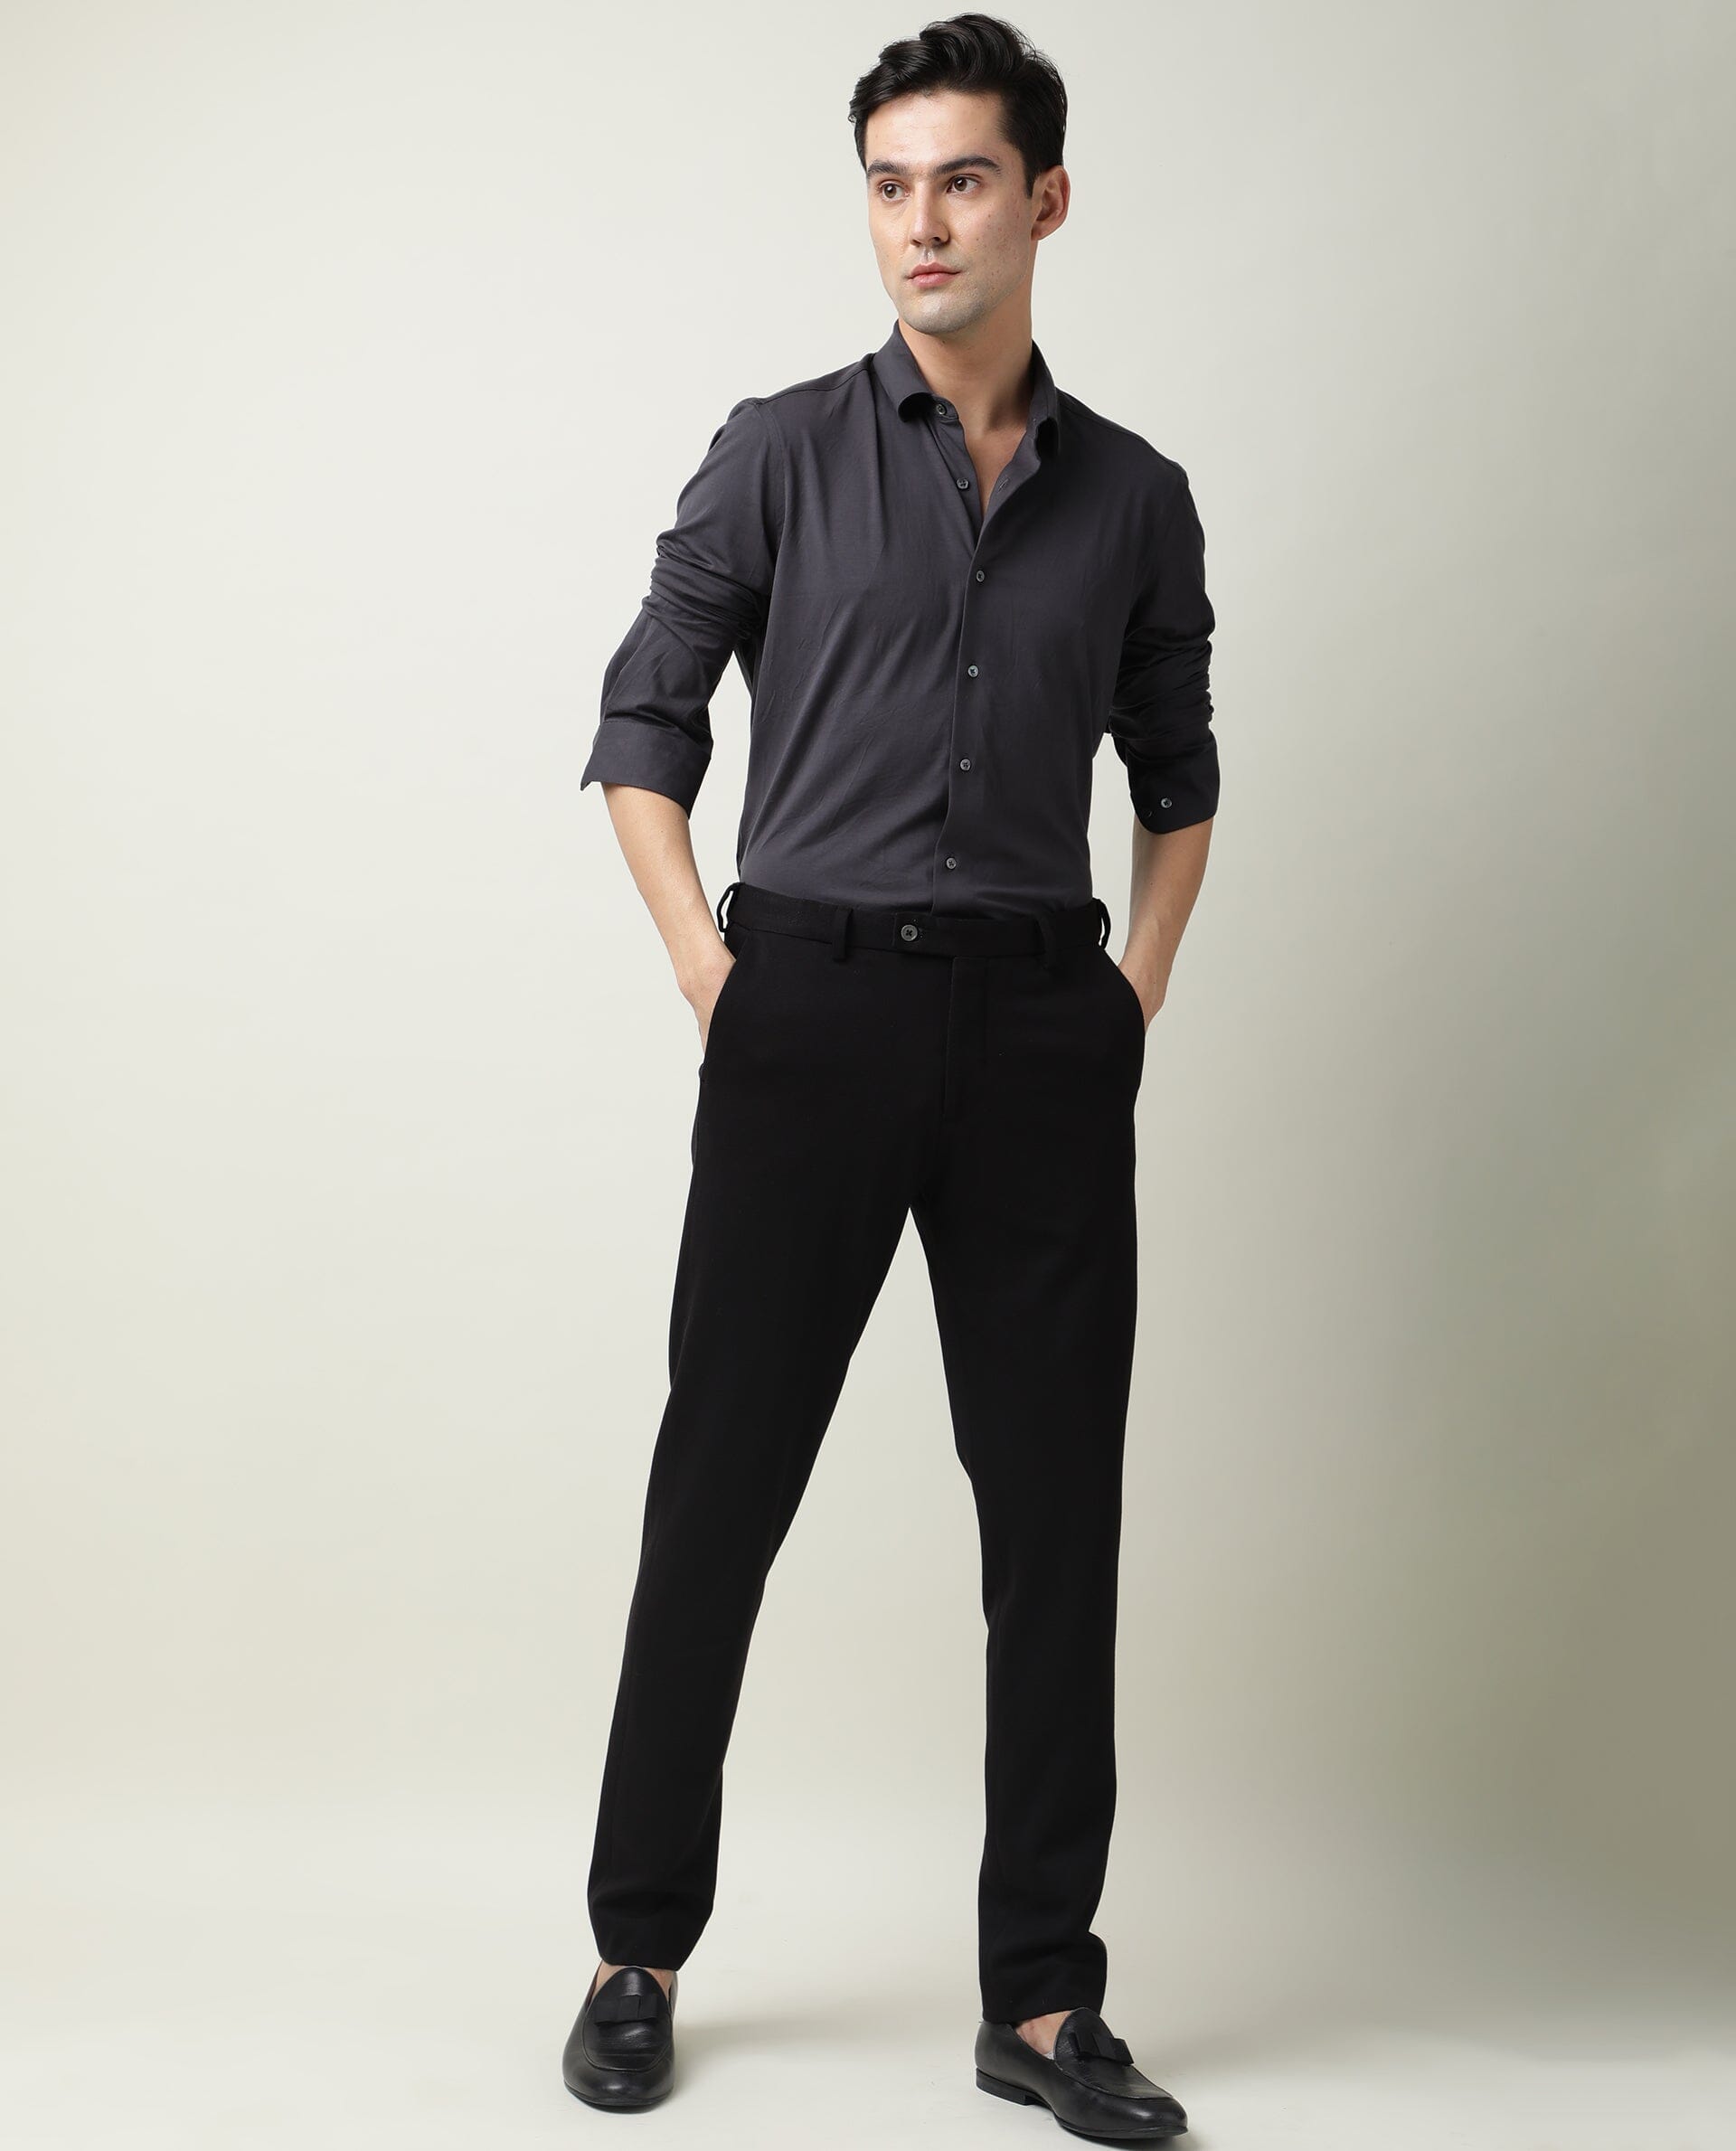 Trendy Grey Shirt and Black Pants For Men